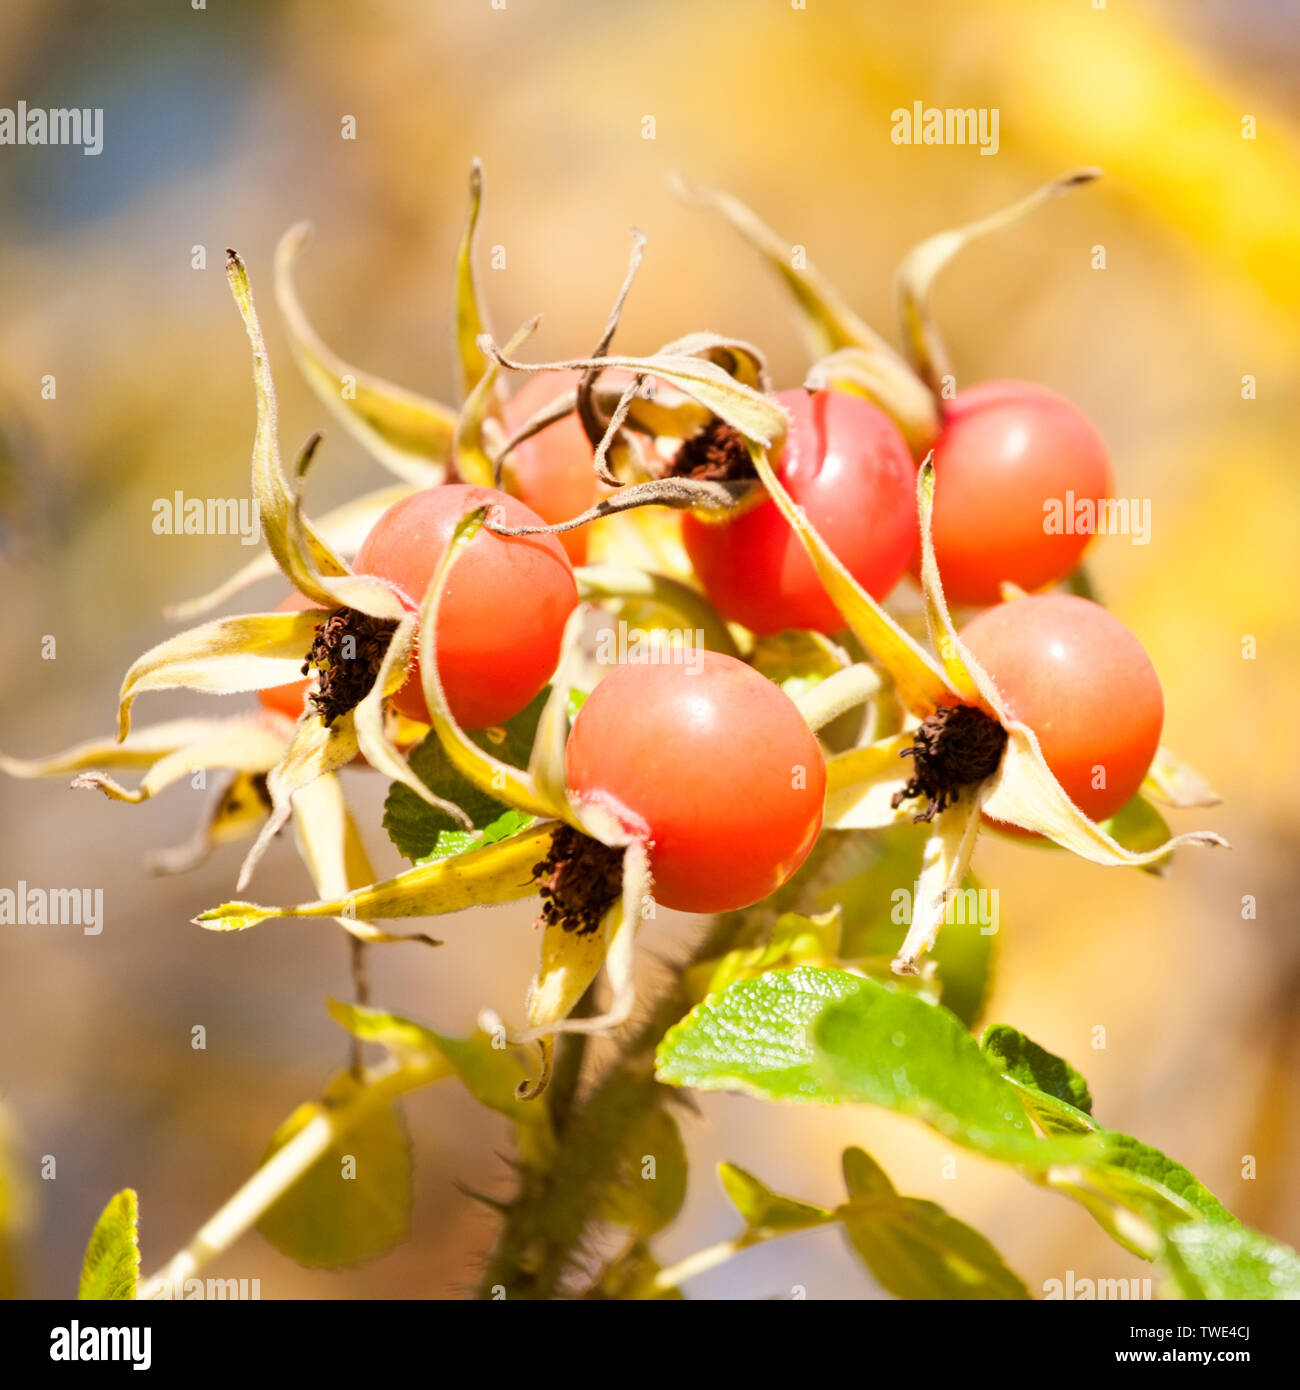 dog-rose fruits closeup on autumn yellow leaves background Stock Photo